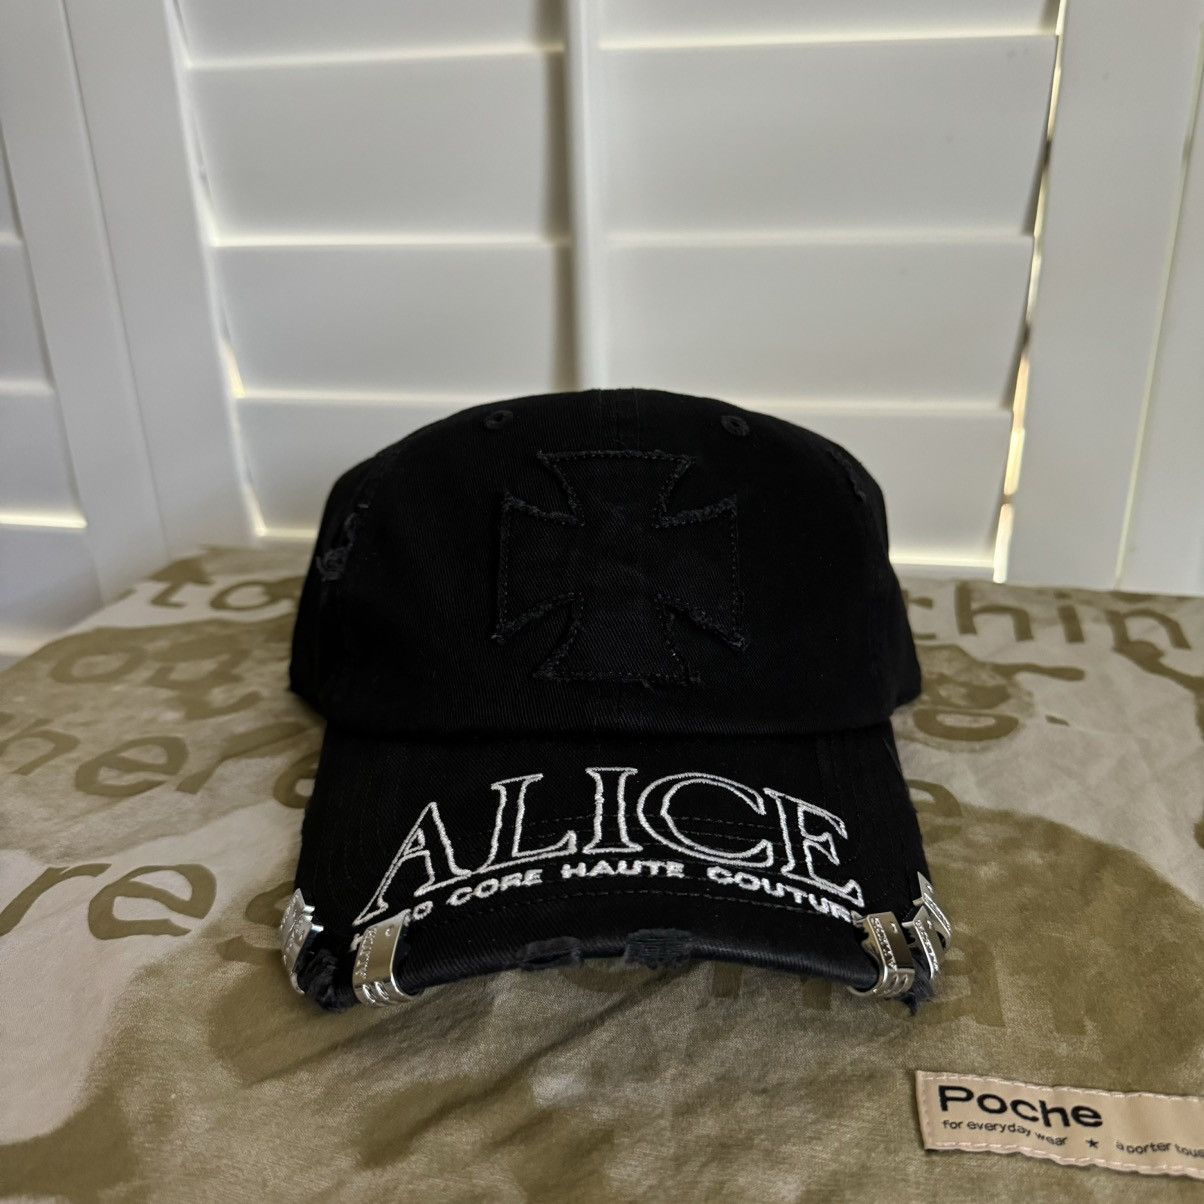 Alice Hollywood Atelier Logo Cap 2.0 | Grailed